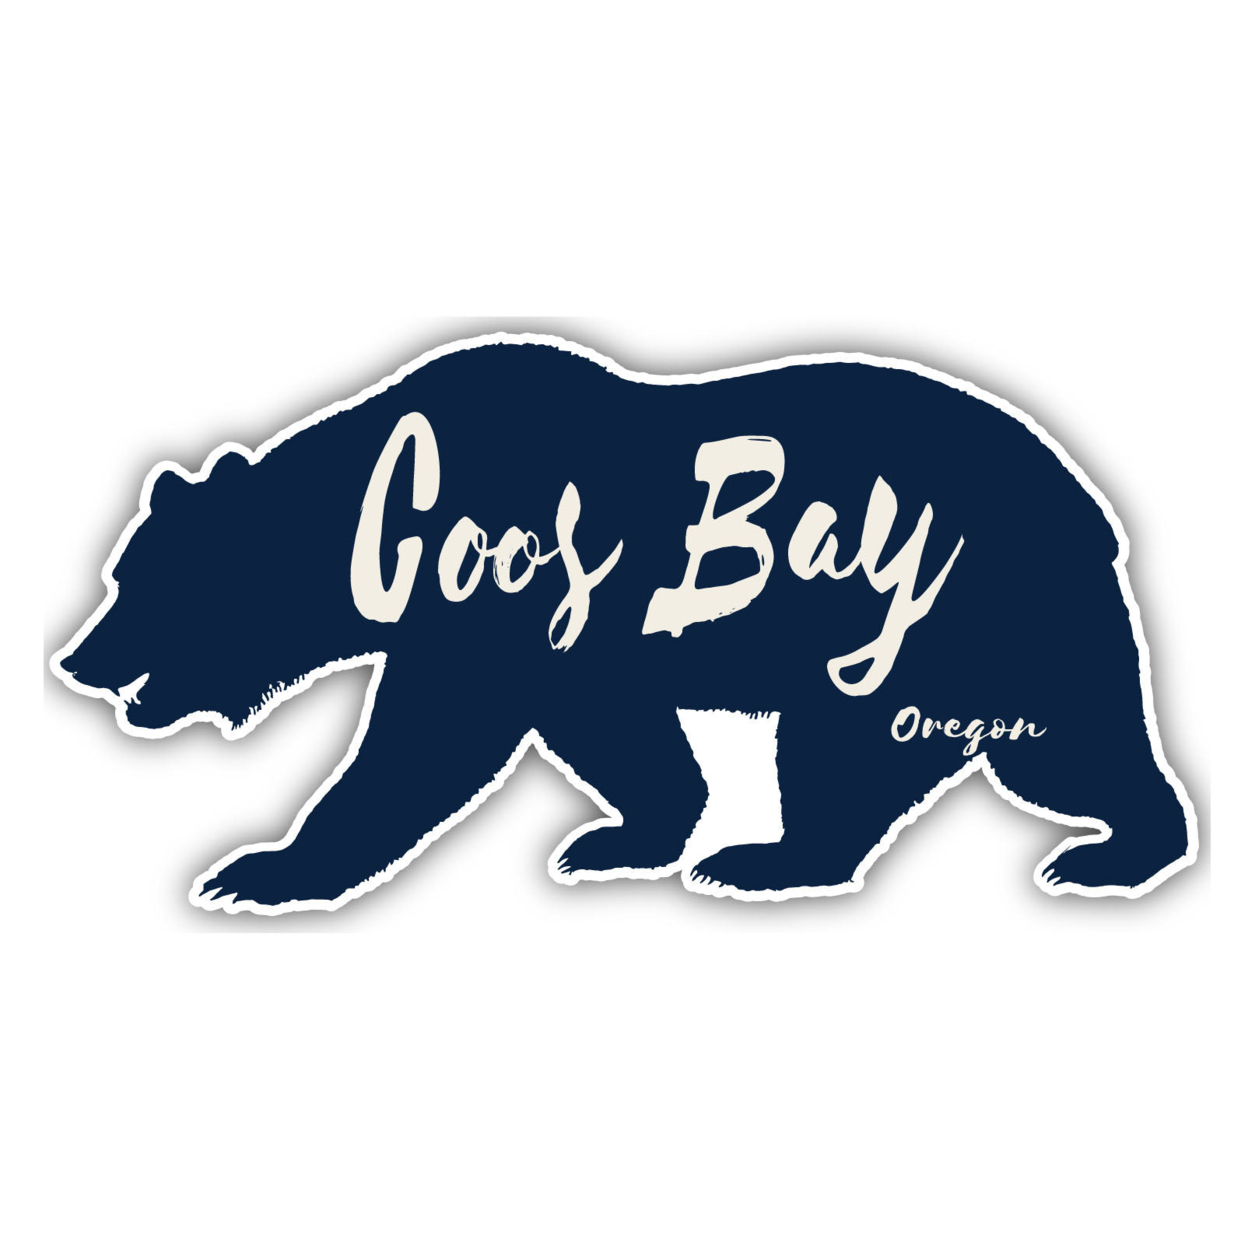 Coos Bay Oregon Souvenir Decorative Stickers (Choose Theme And Size) - Single Unit, 6-Inch, Camp Life